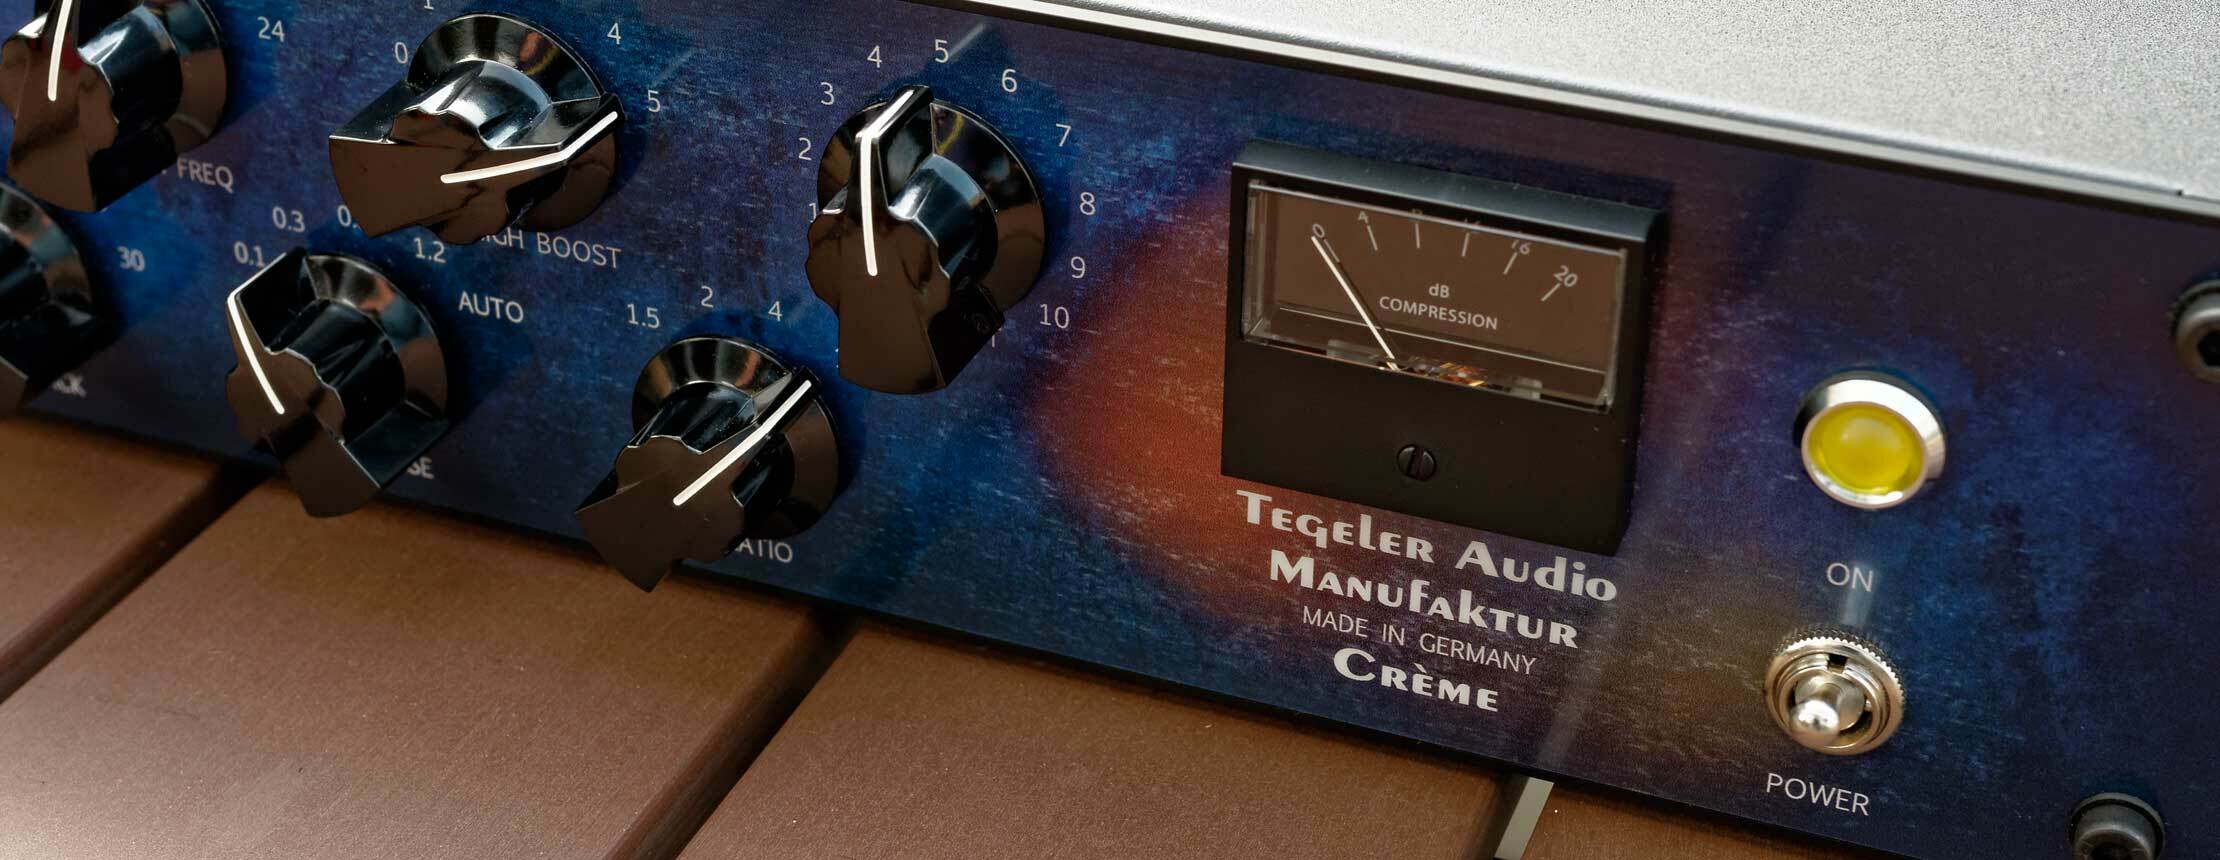 Tegeler Audio Manufaktur CrÈme - Compressor / limiter / gate - Main picture